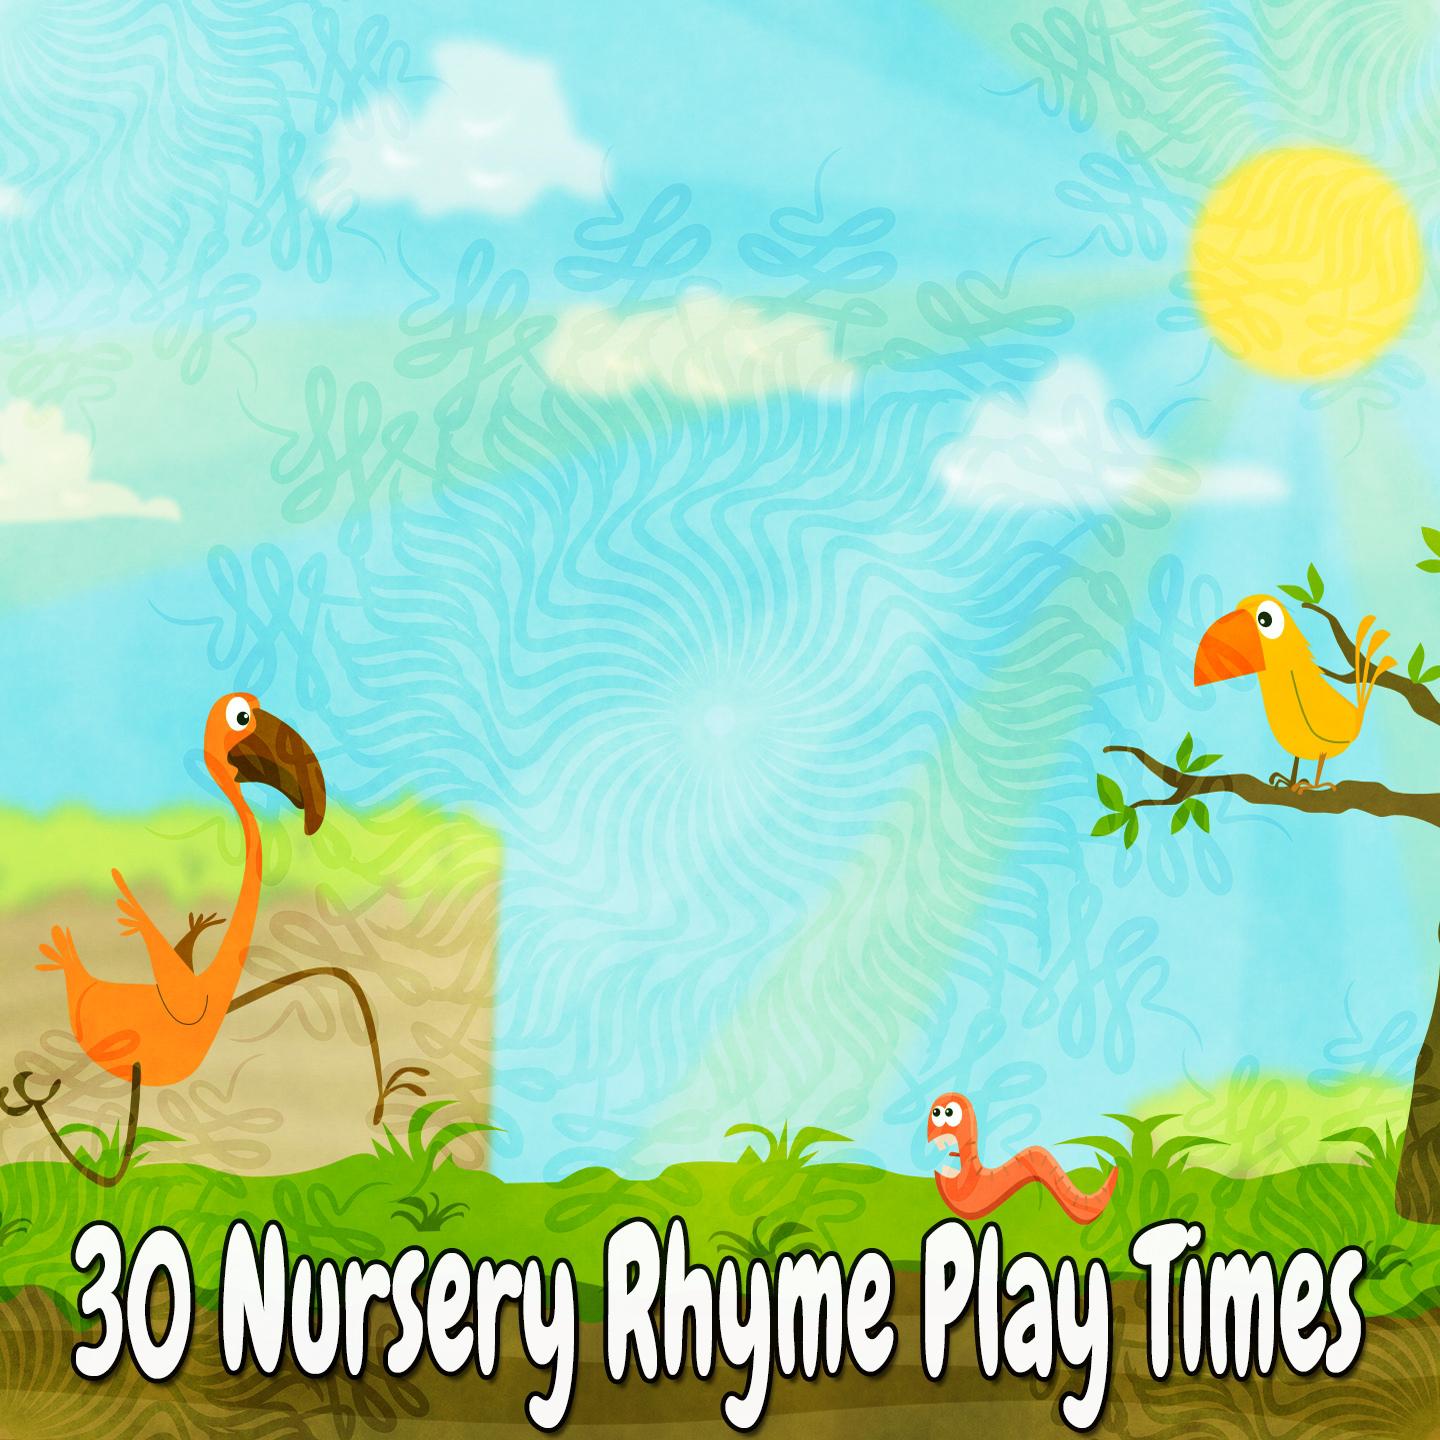 30 Nursery Rhyme Play Times